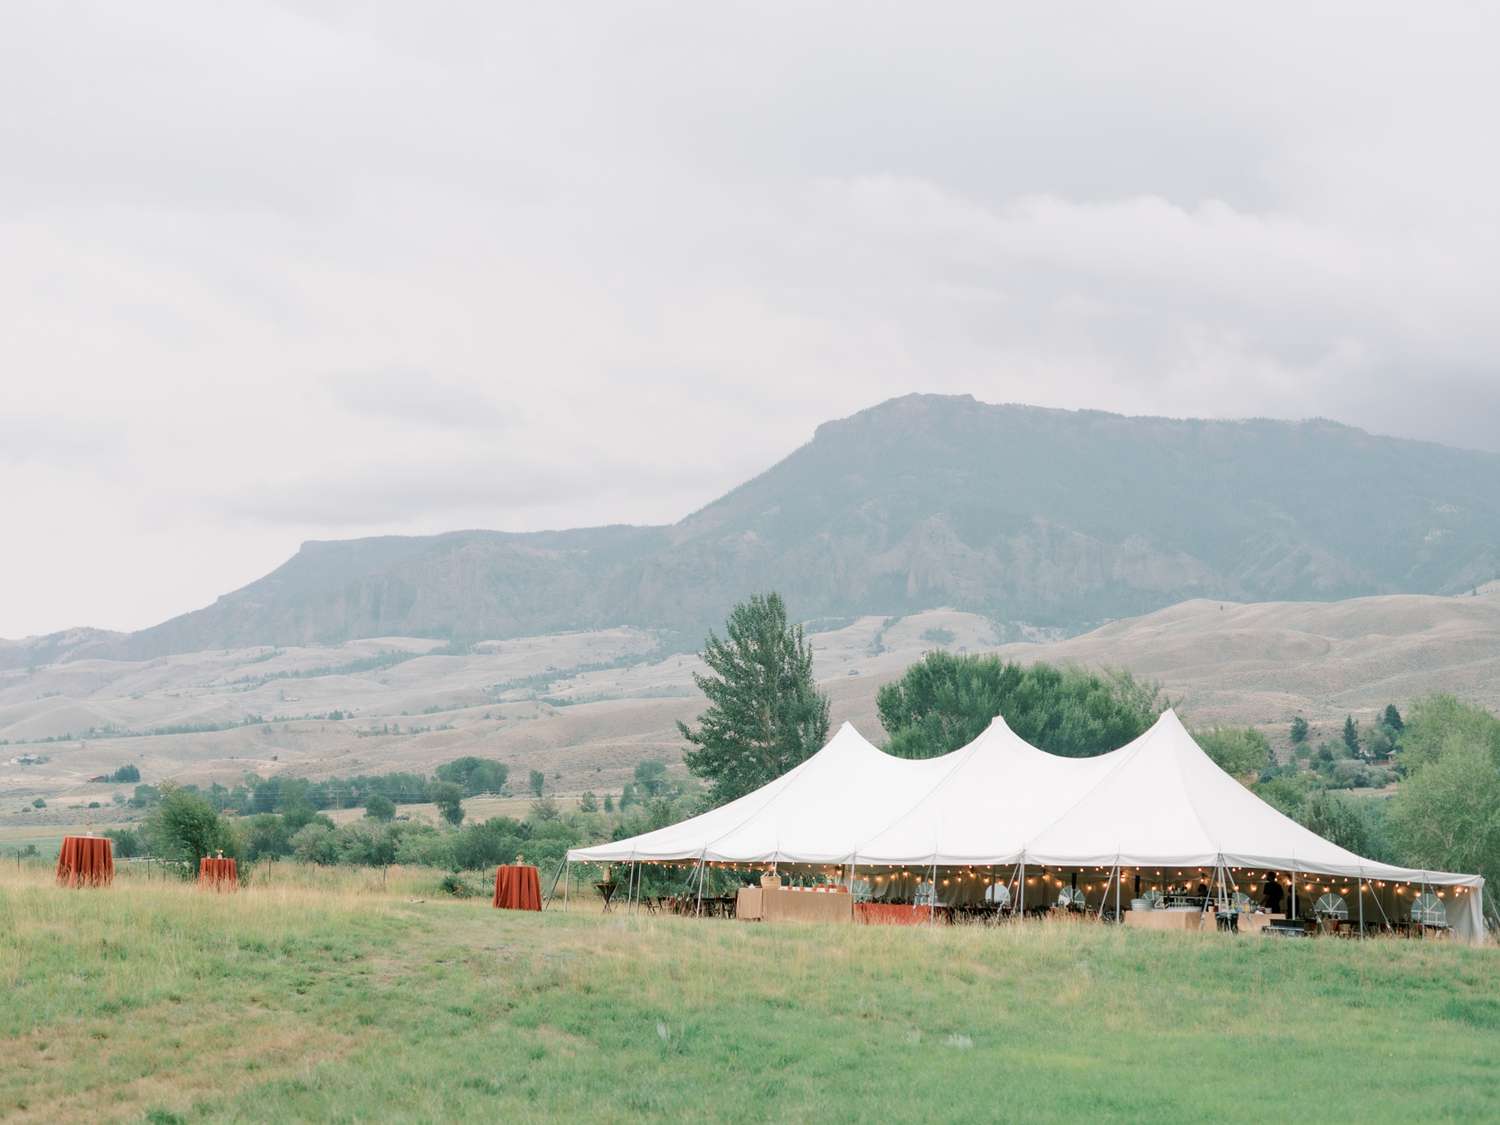 outdoor wedding tent in grassy field overlooking mountains